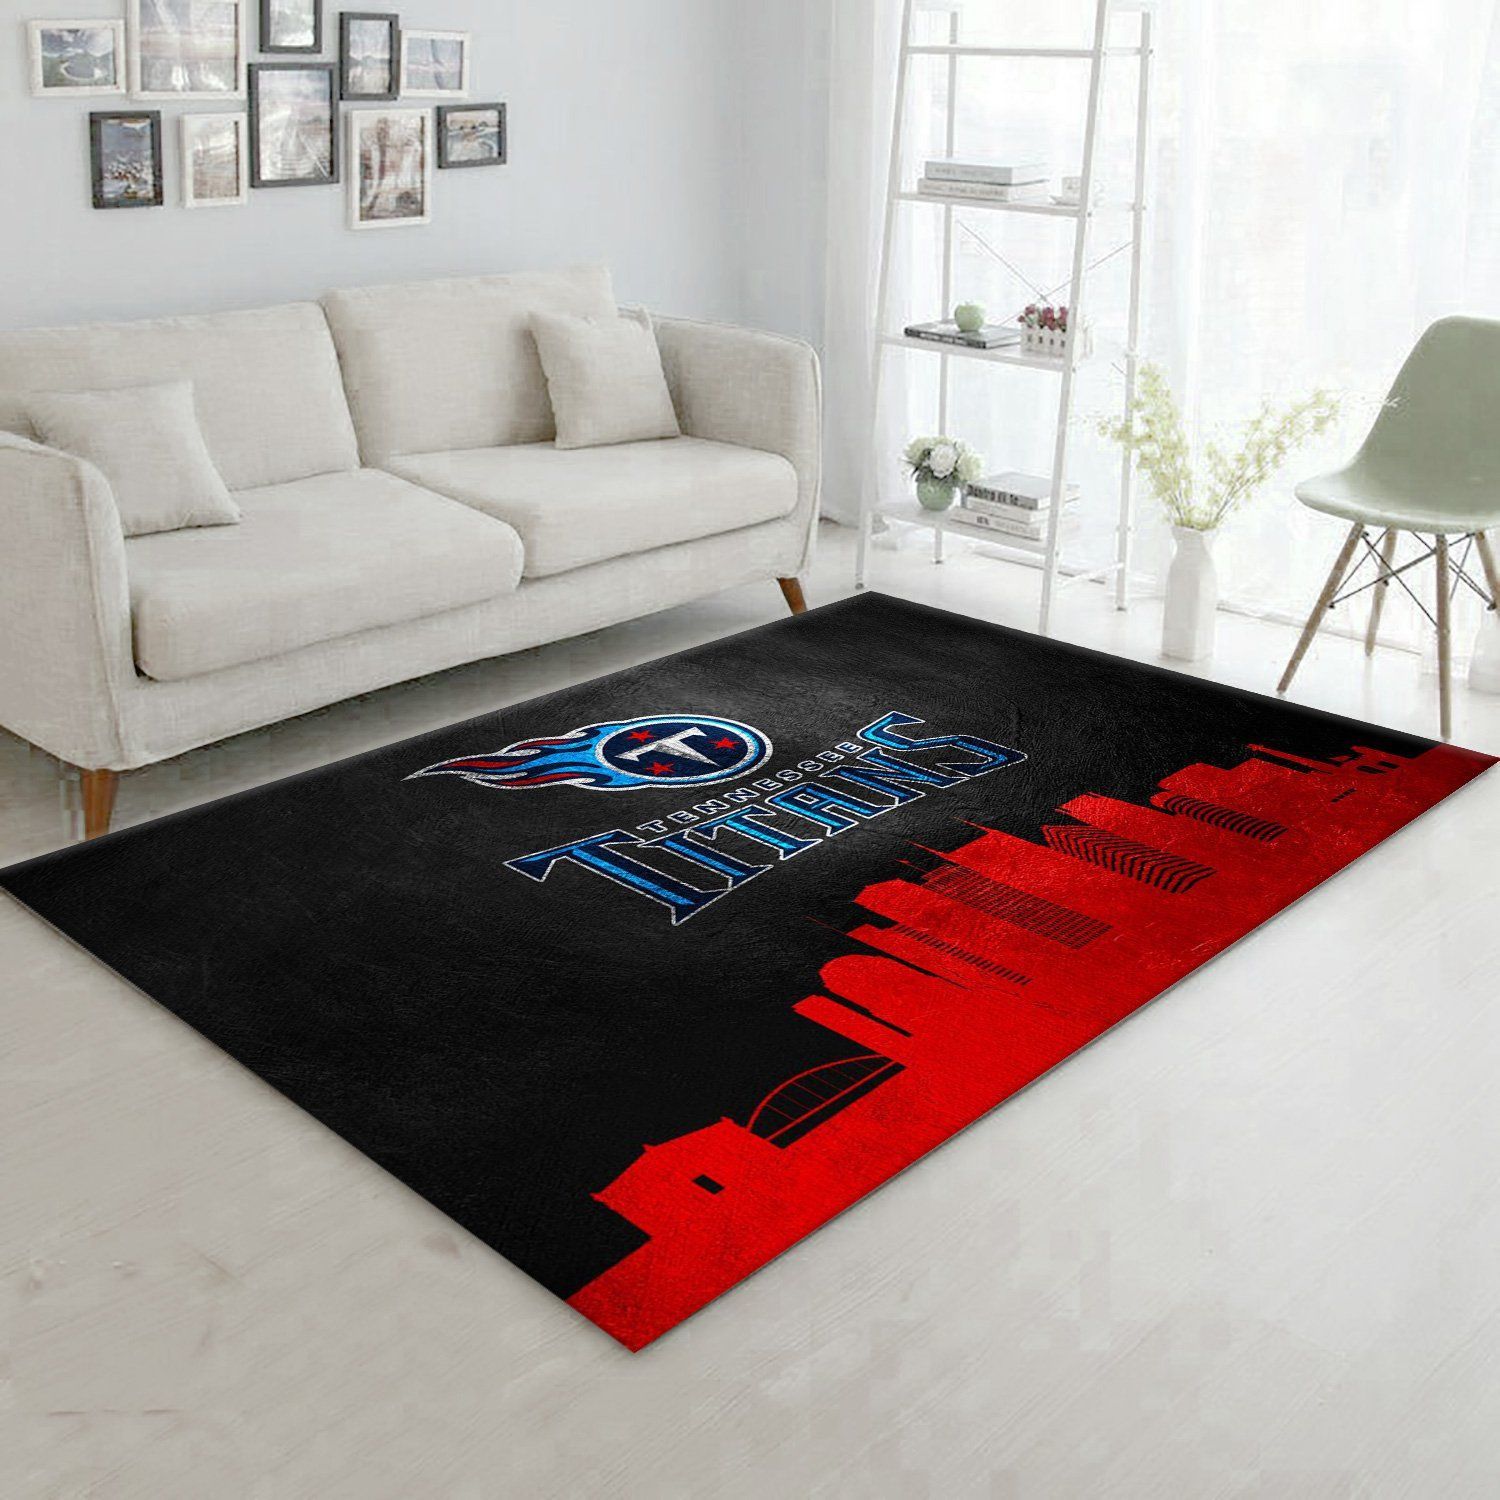 Tennessee Titans Skyline NFL FOOTBALL Floor home decoration carpet rug